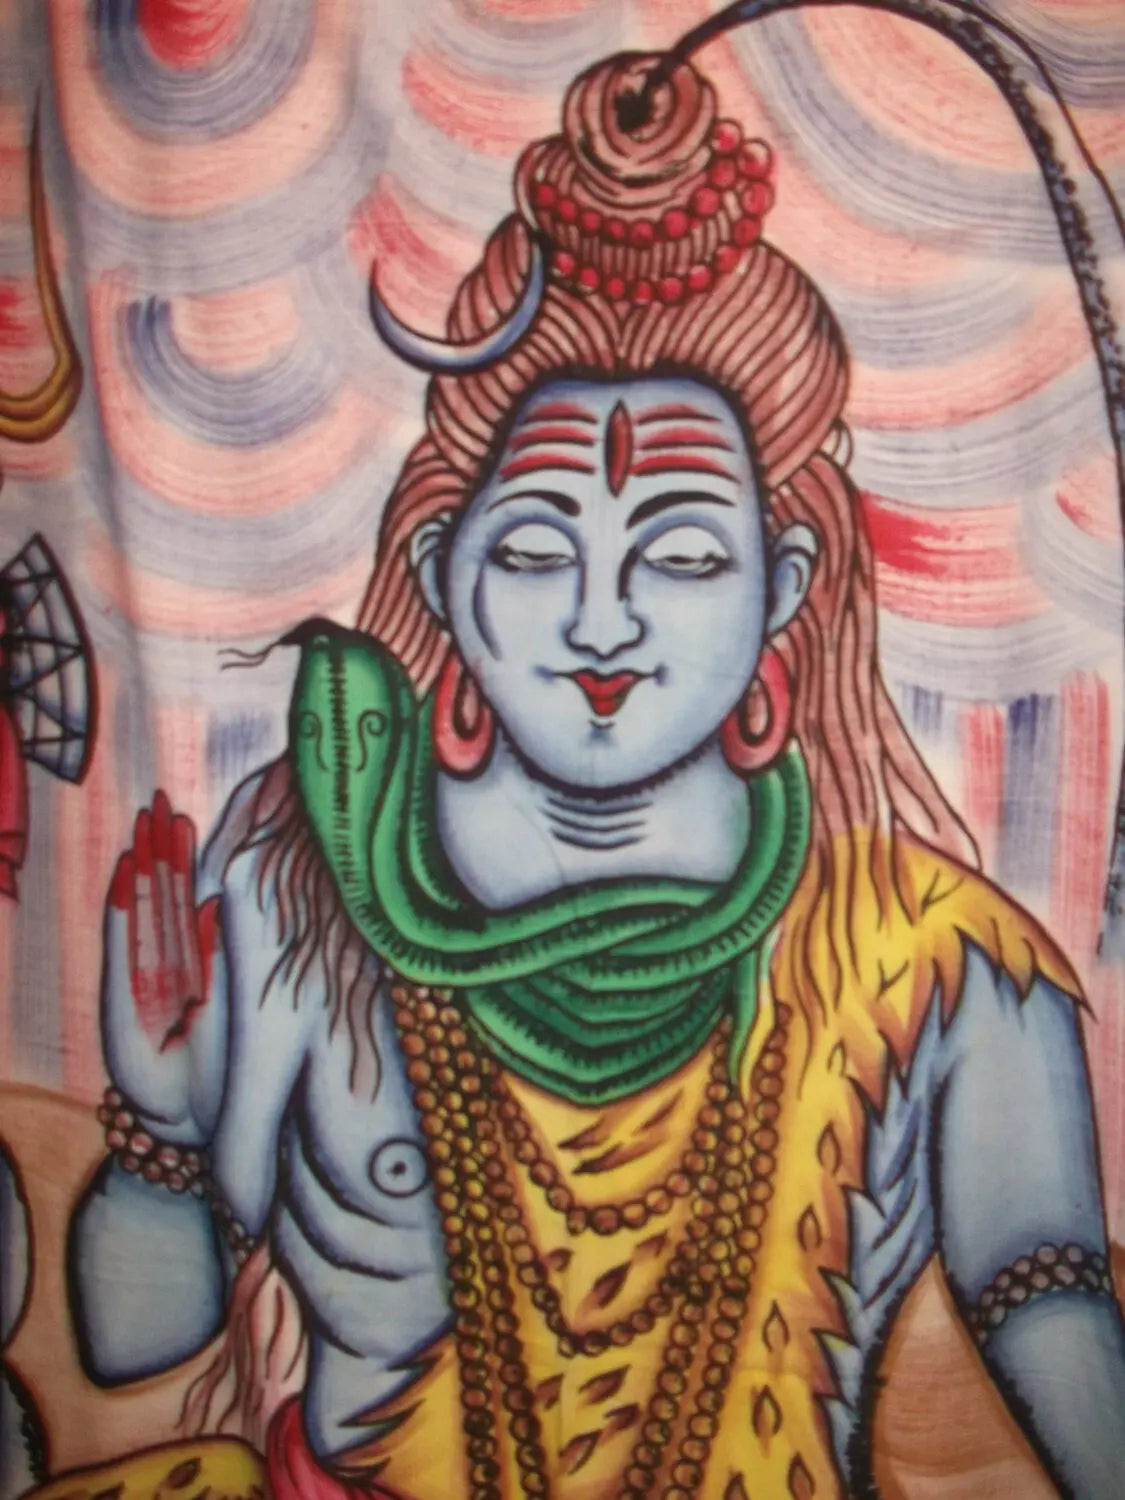 KingSizeThrow/ WallHanging/ BedSpread.Screen/hand-Printed.Ganeshe.Shiva Unbranded